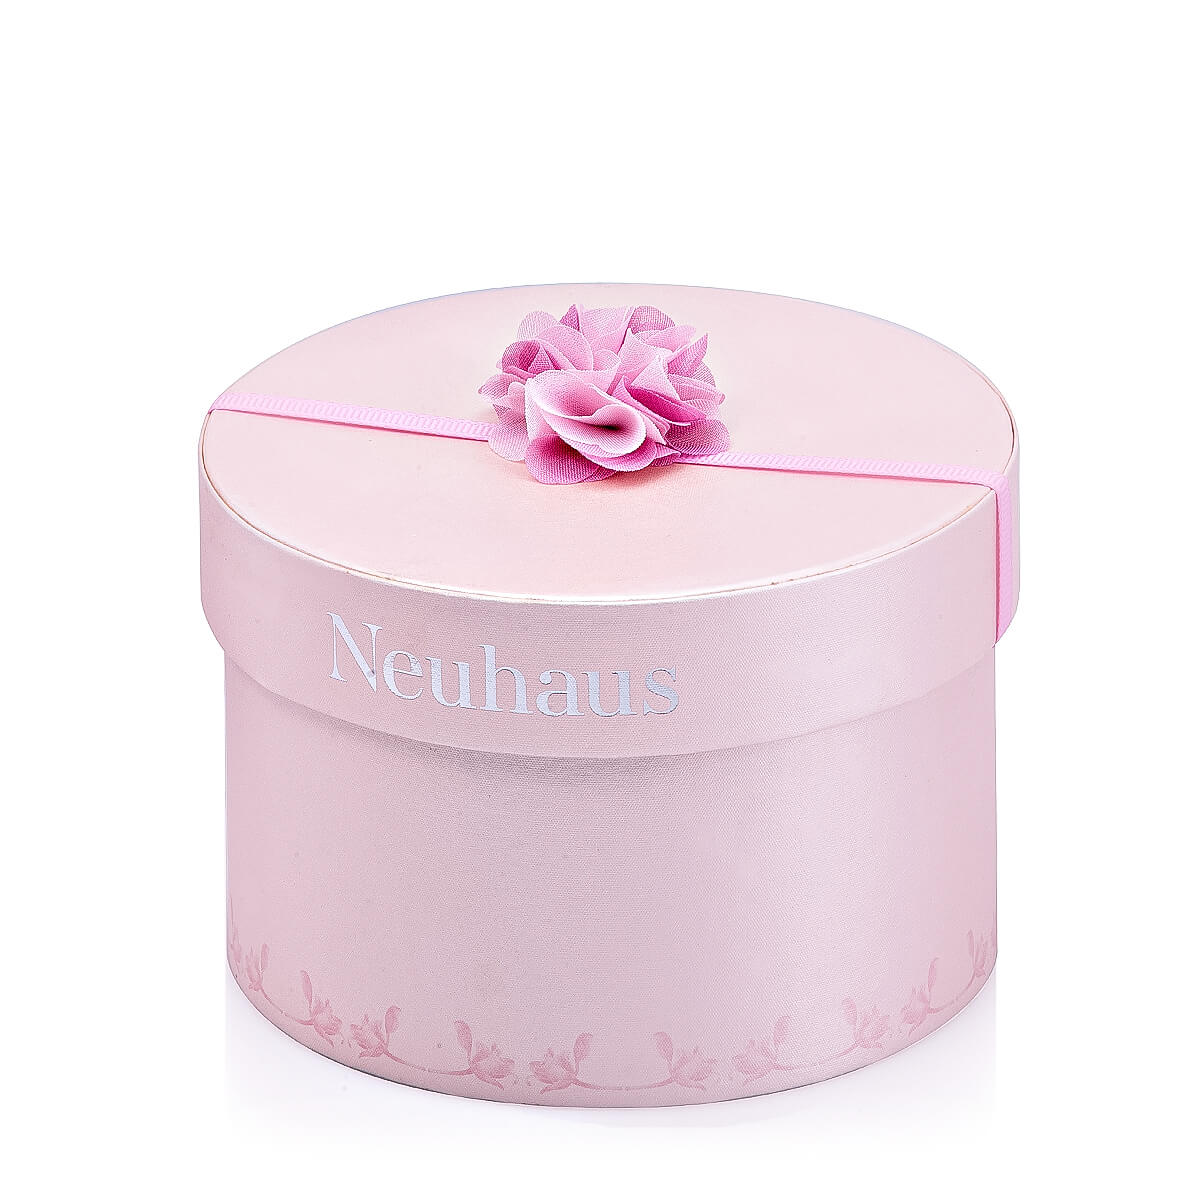 Neuhaus Feminine Box & Rose - Delivery in Belgium by GiftsForEurope